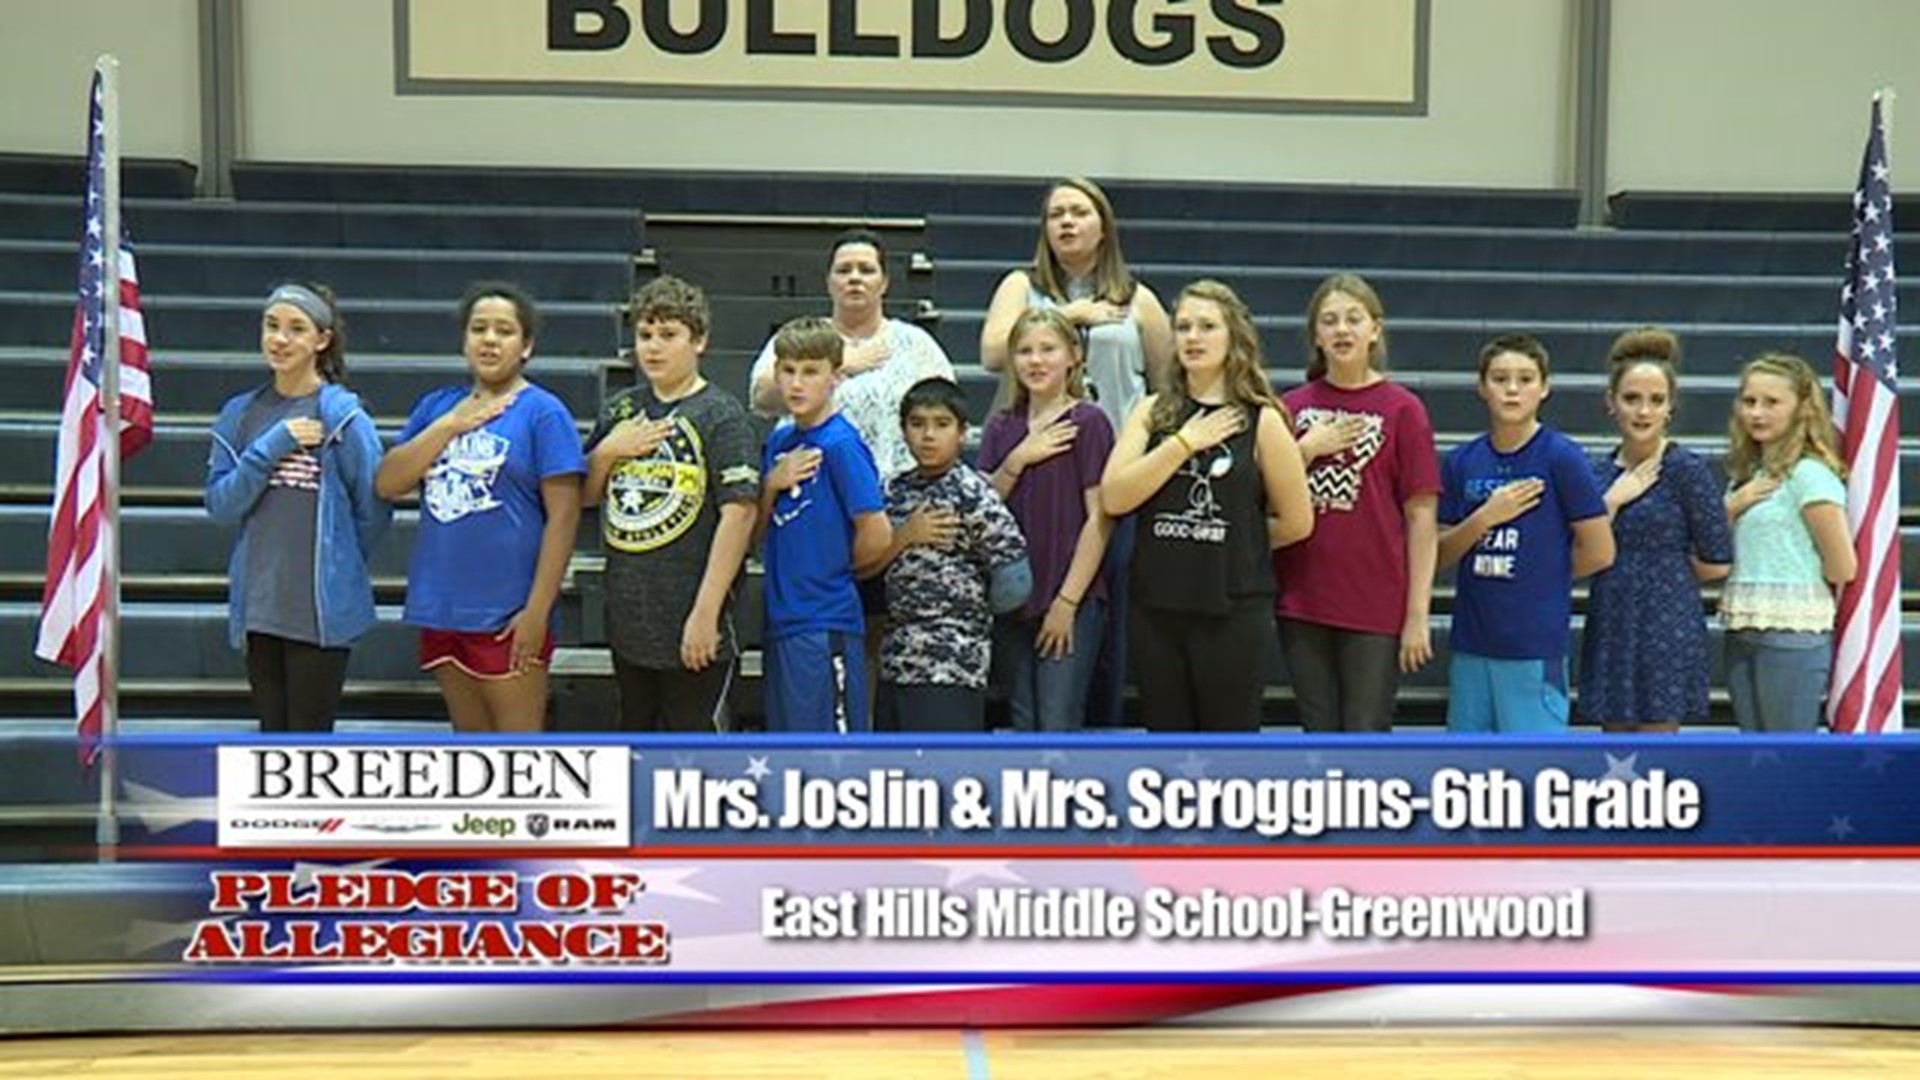 East Hills Middle School, Greenwood - Mrs. Joslin & Mrs. Scroggins - 6th Grade